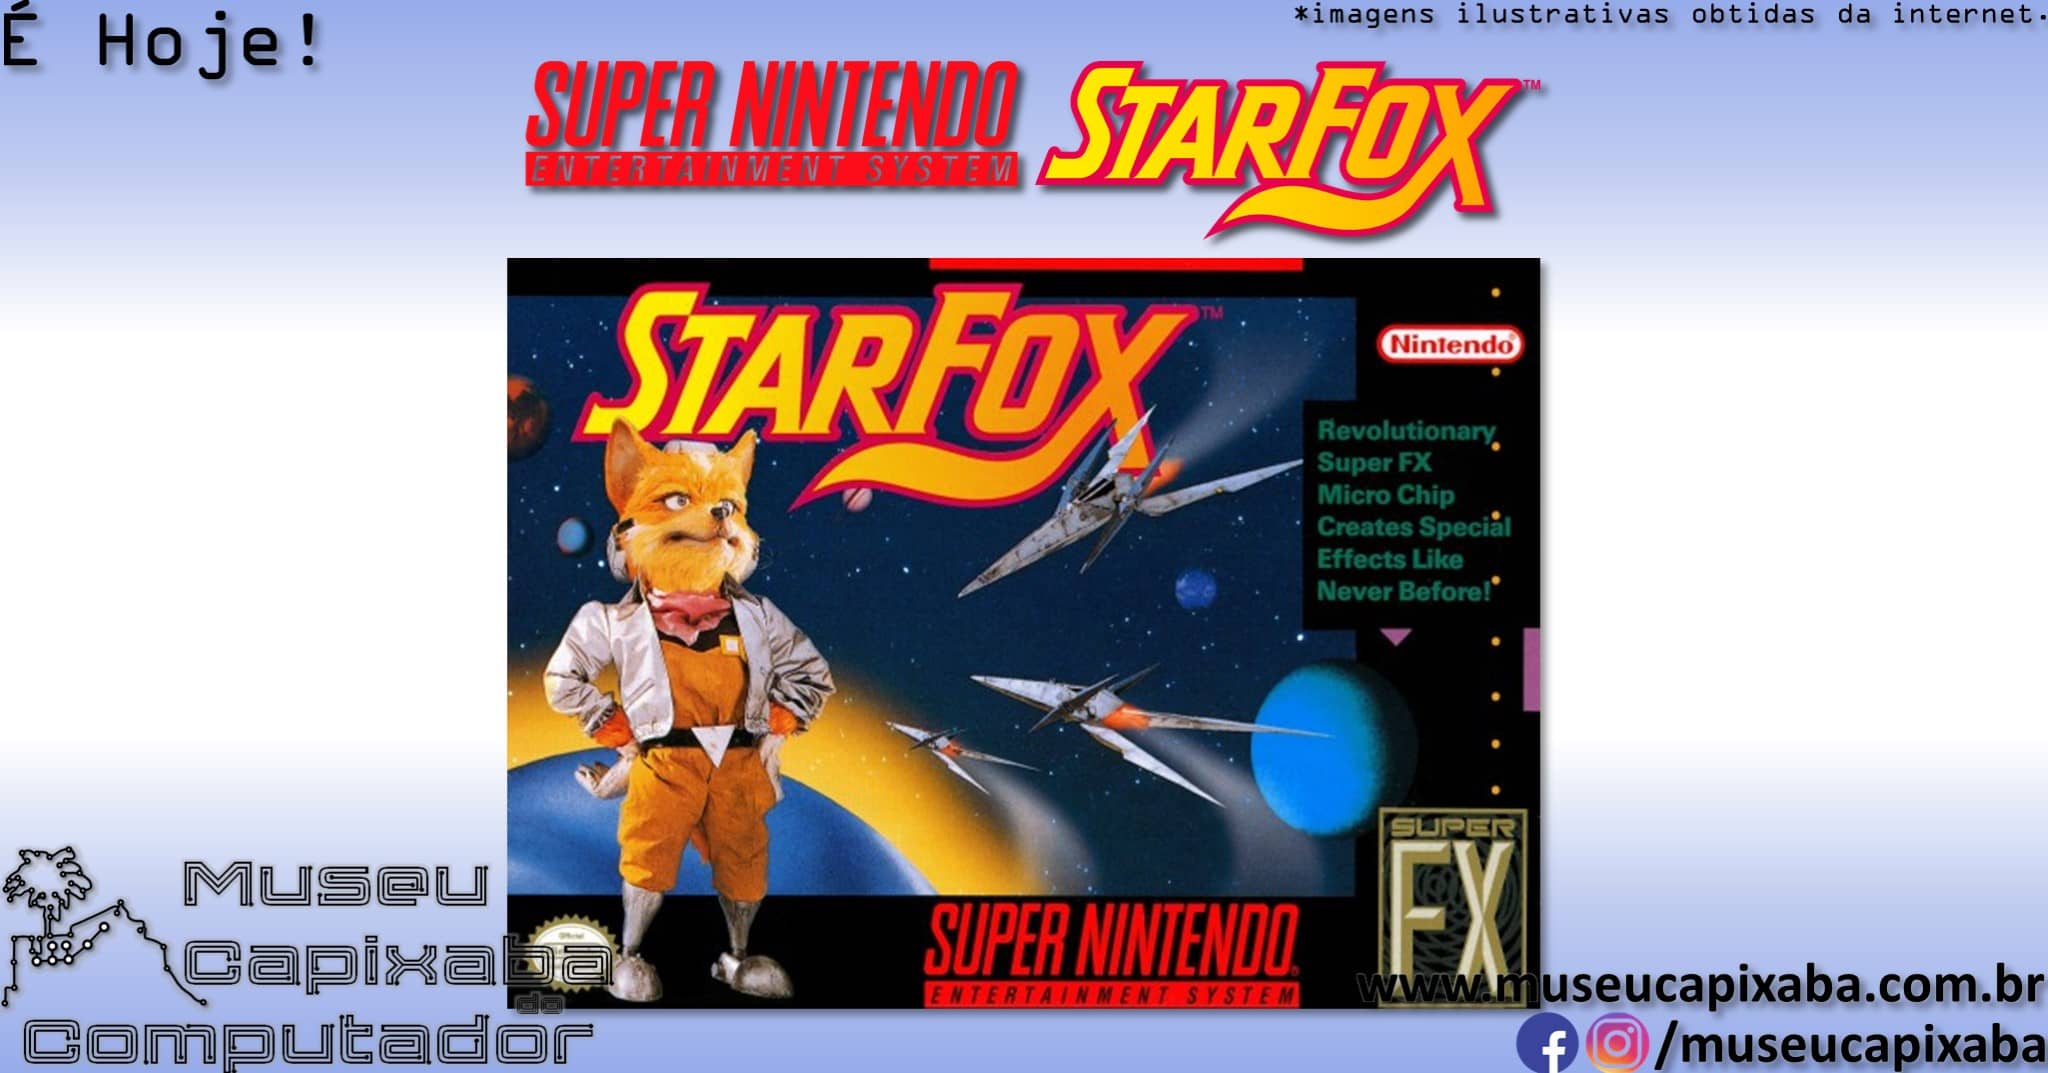 Star Fox - Super Nintendo